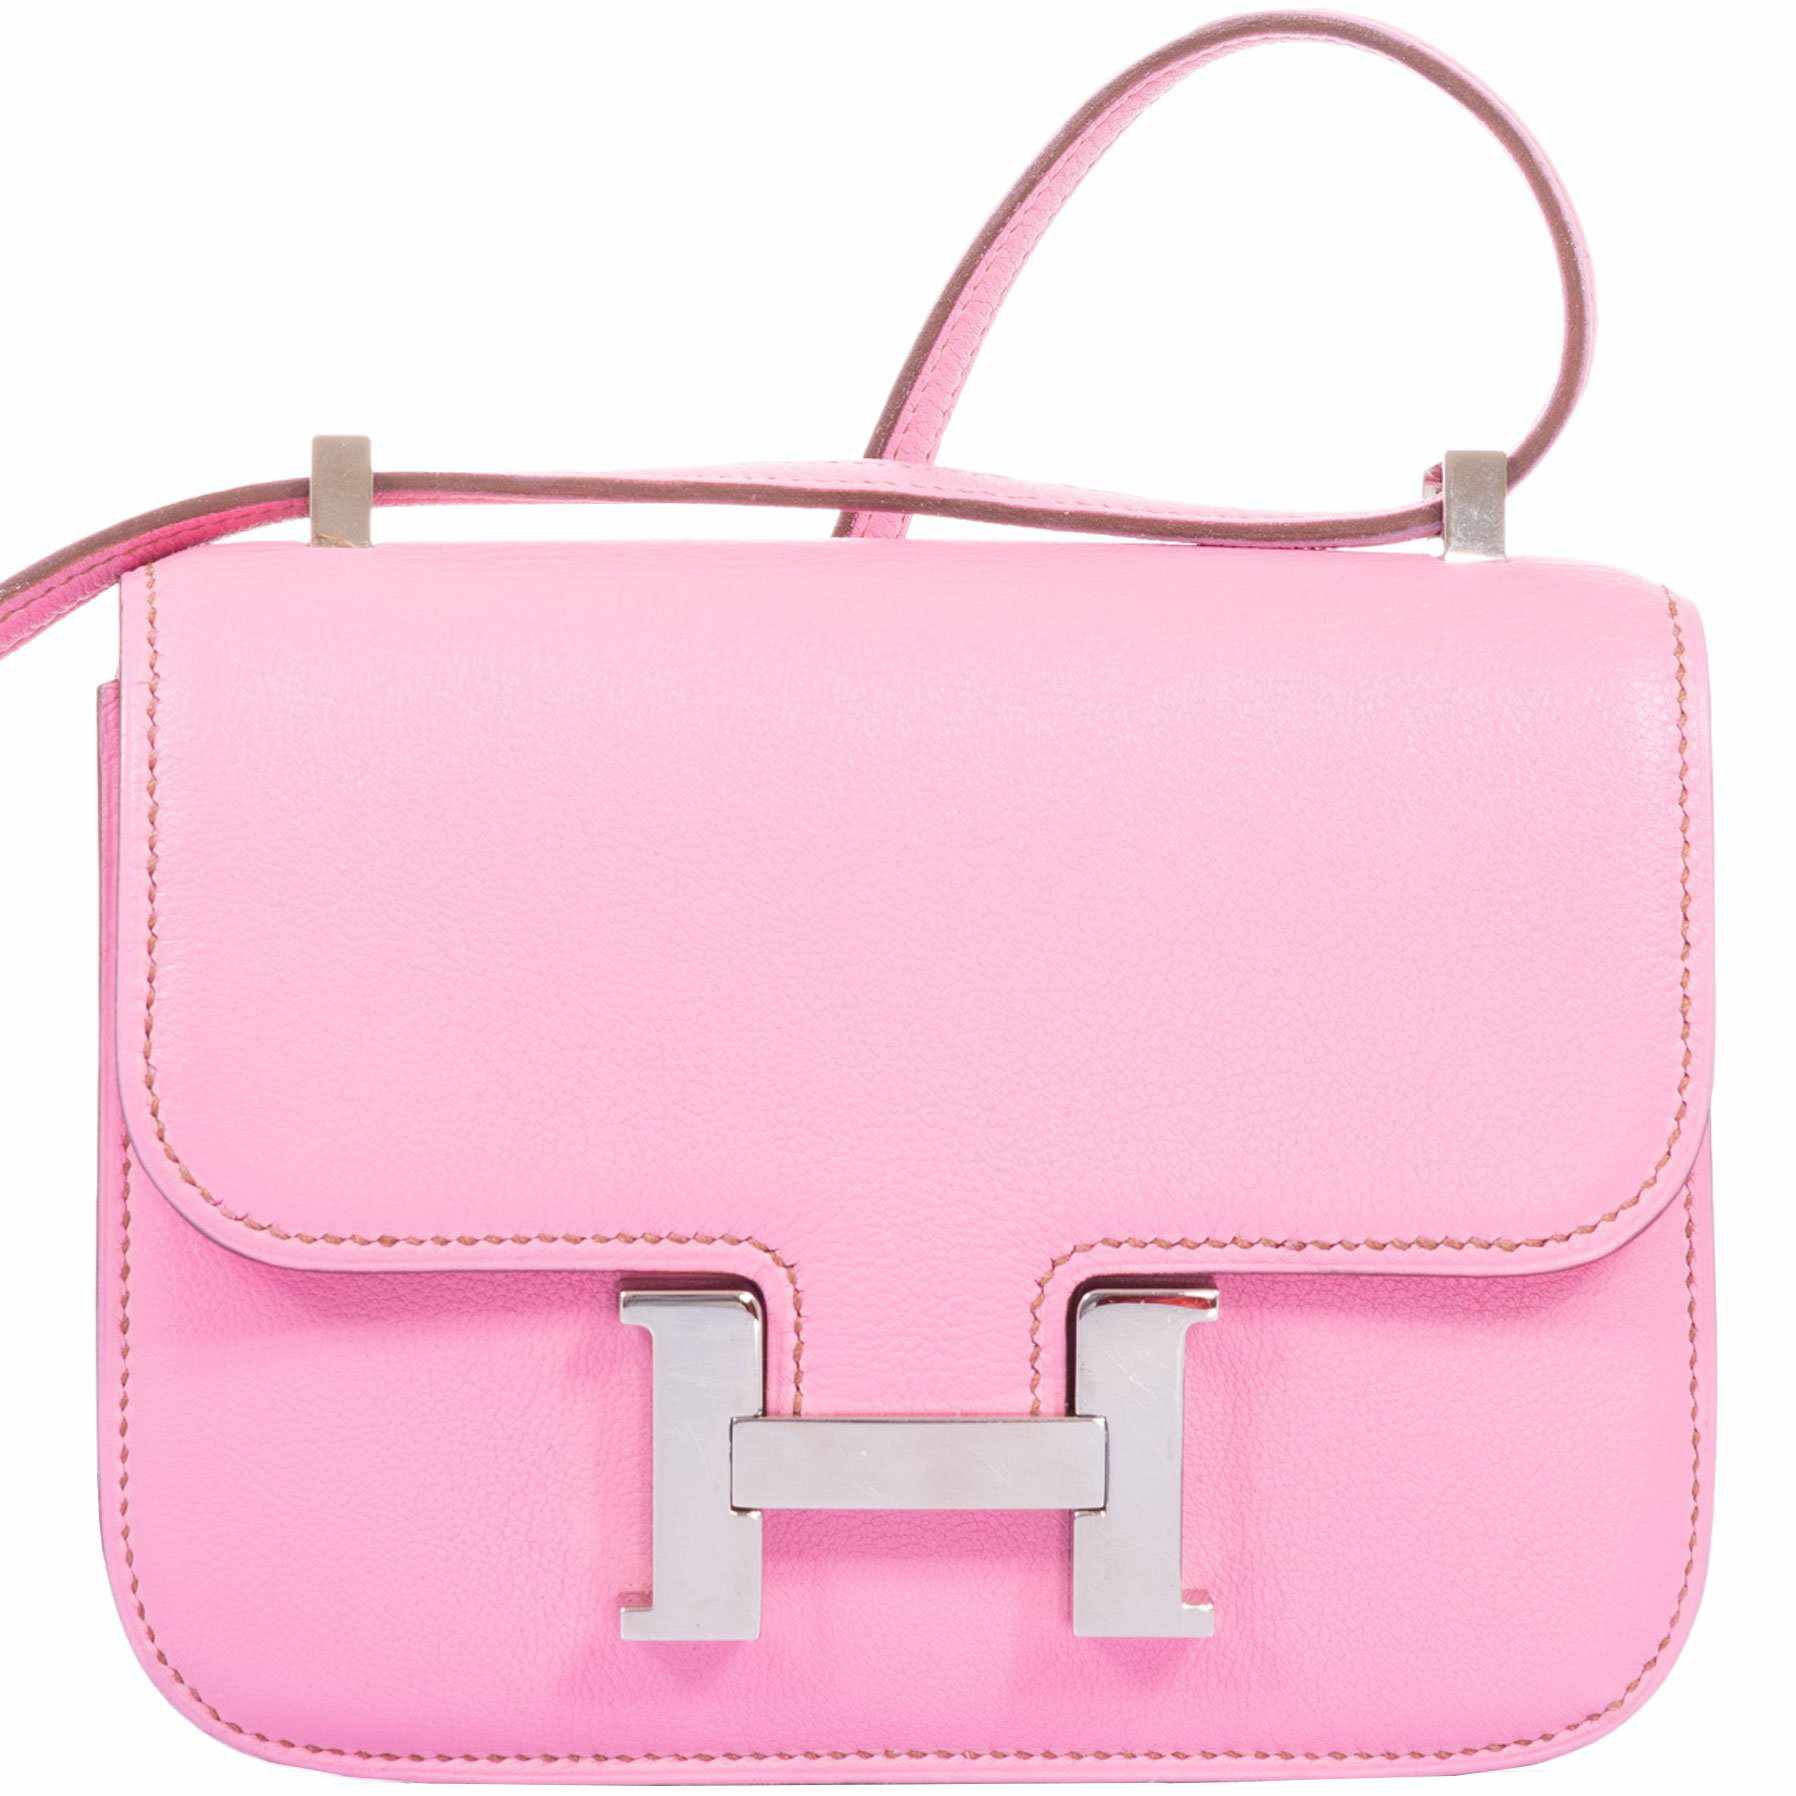 Hermès Clic H Bracelet Pink Nacarat Rose Gold PM – Coco Approved Studio